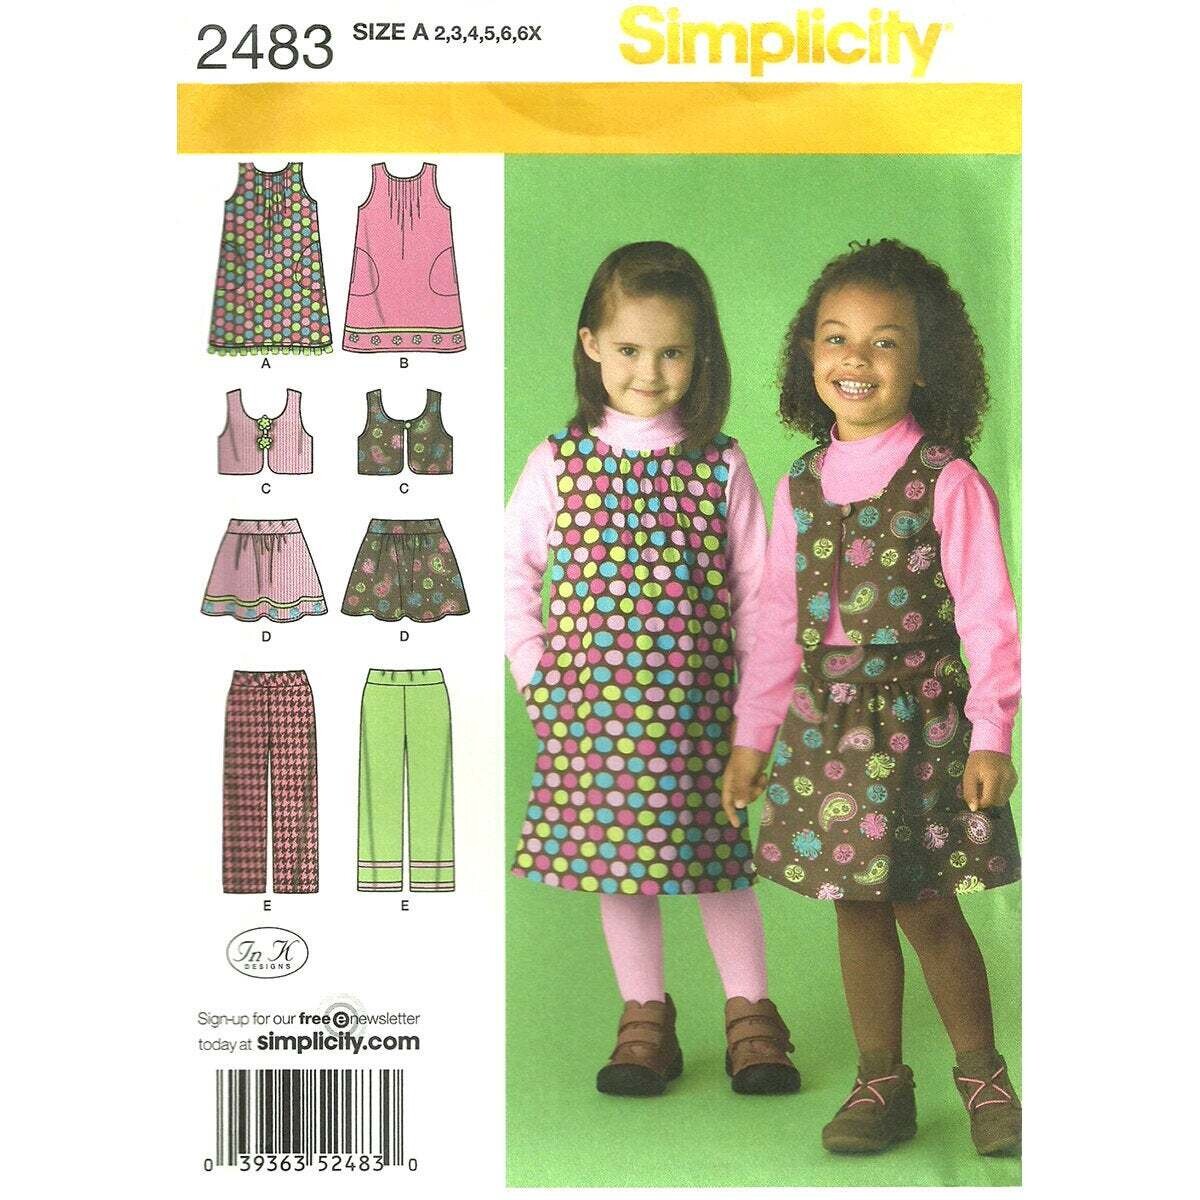 Simplicity 2483 pattern